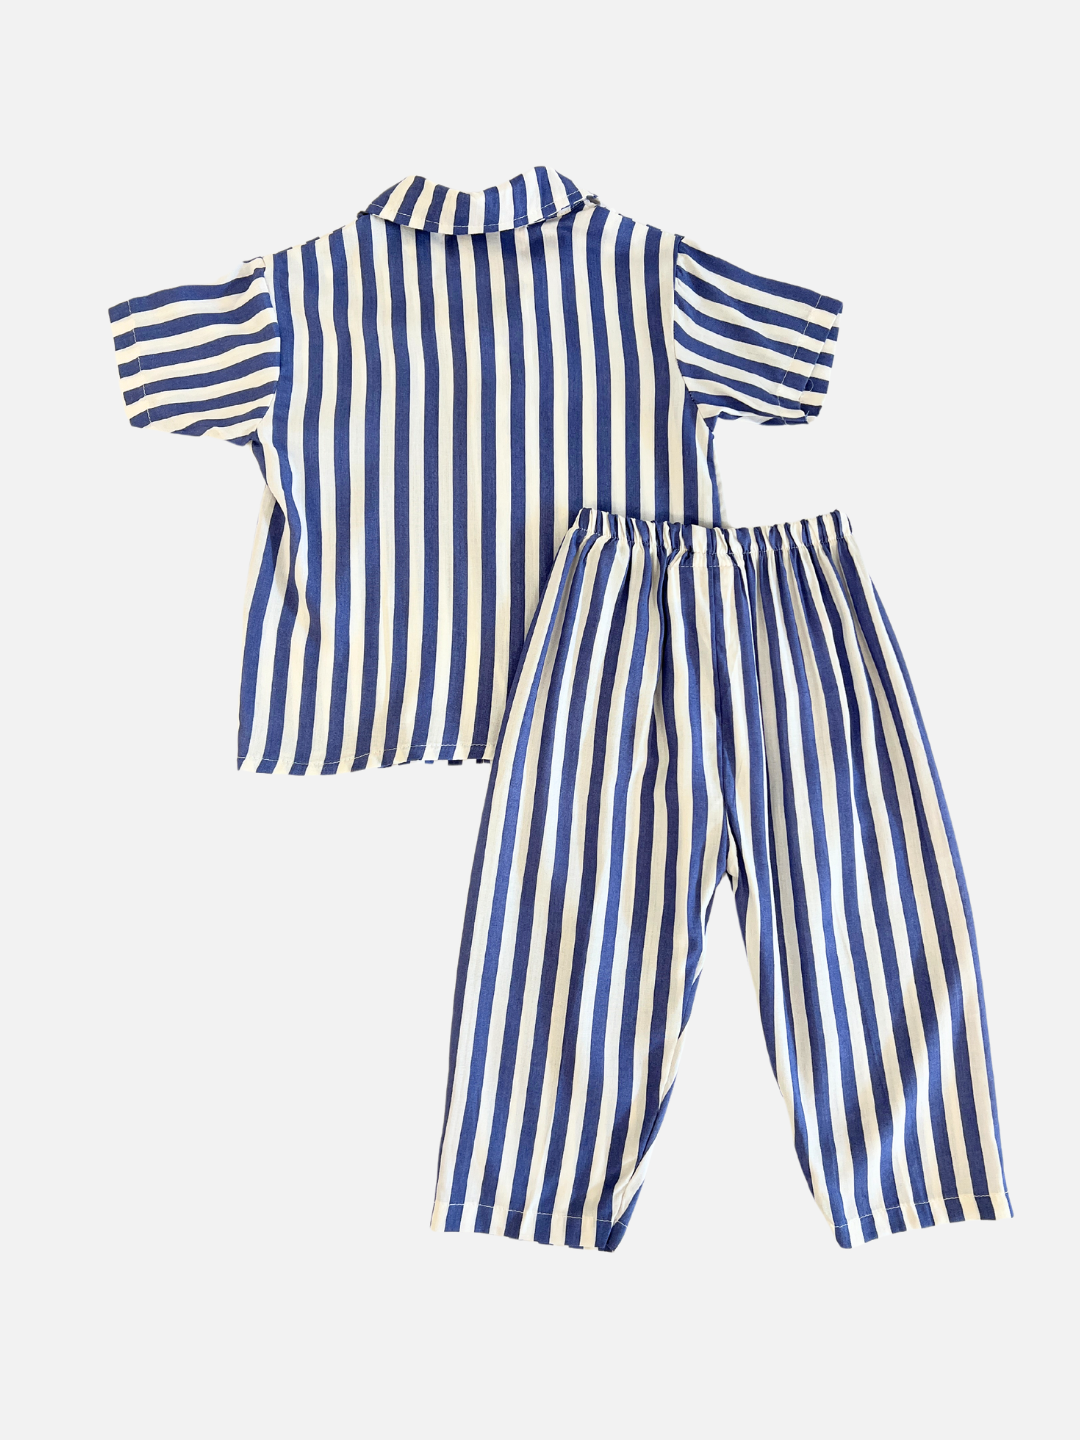 Blue Stripe | Back view of the Michi Pajamas